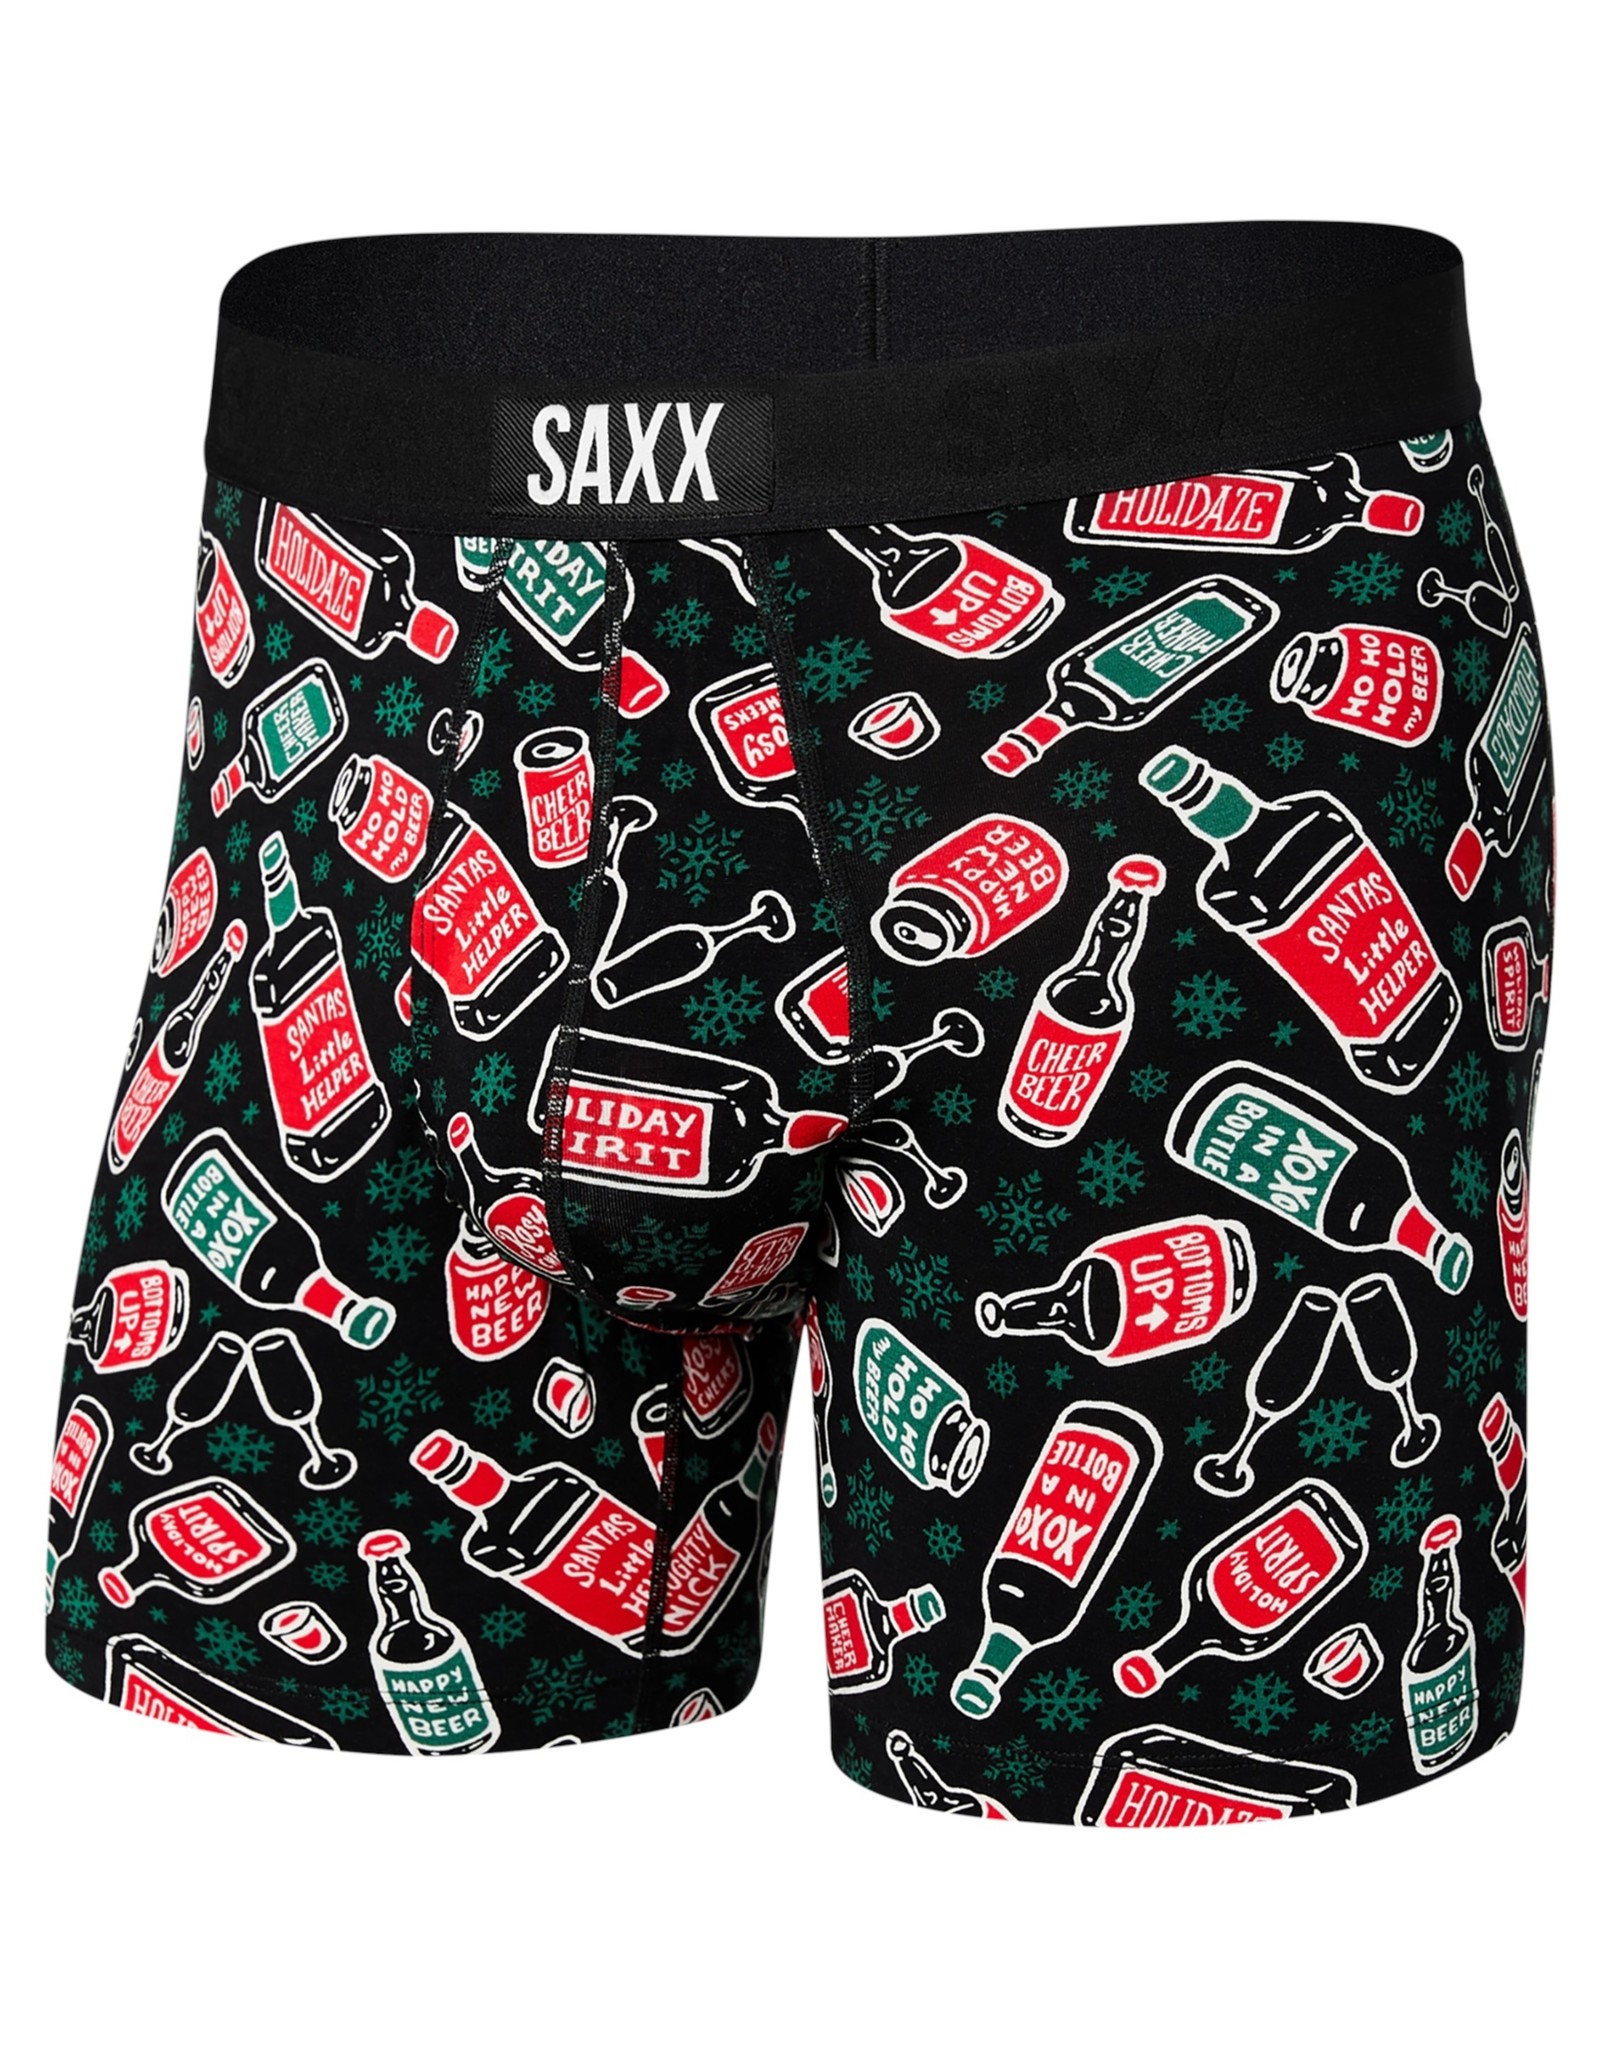 Saxx Ultra - Boxer Brief SXBB30F Men's - Shoes & M'Orr